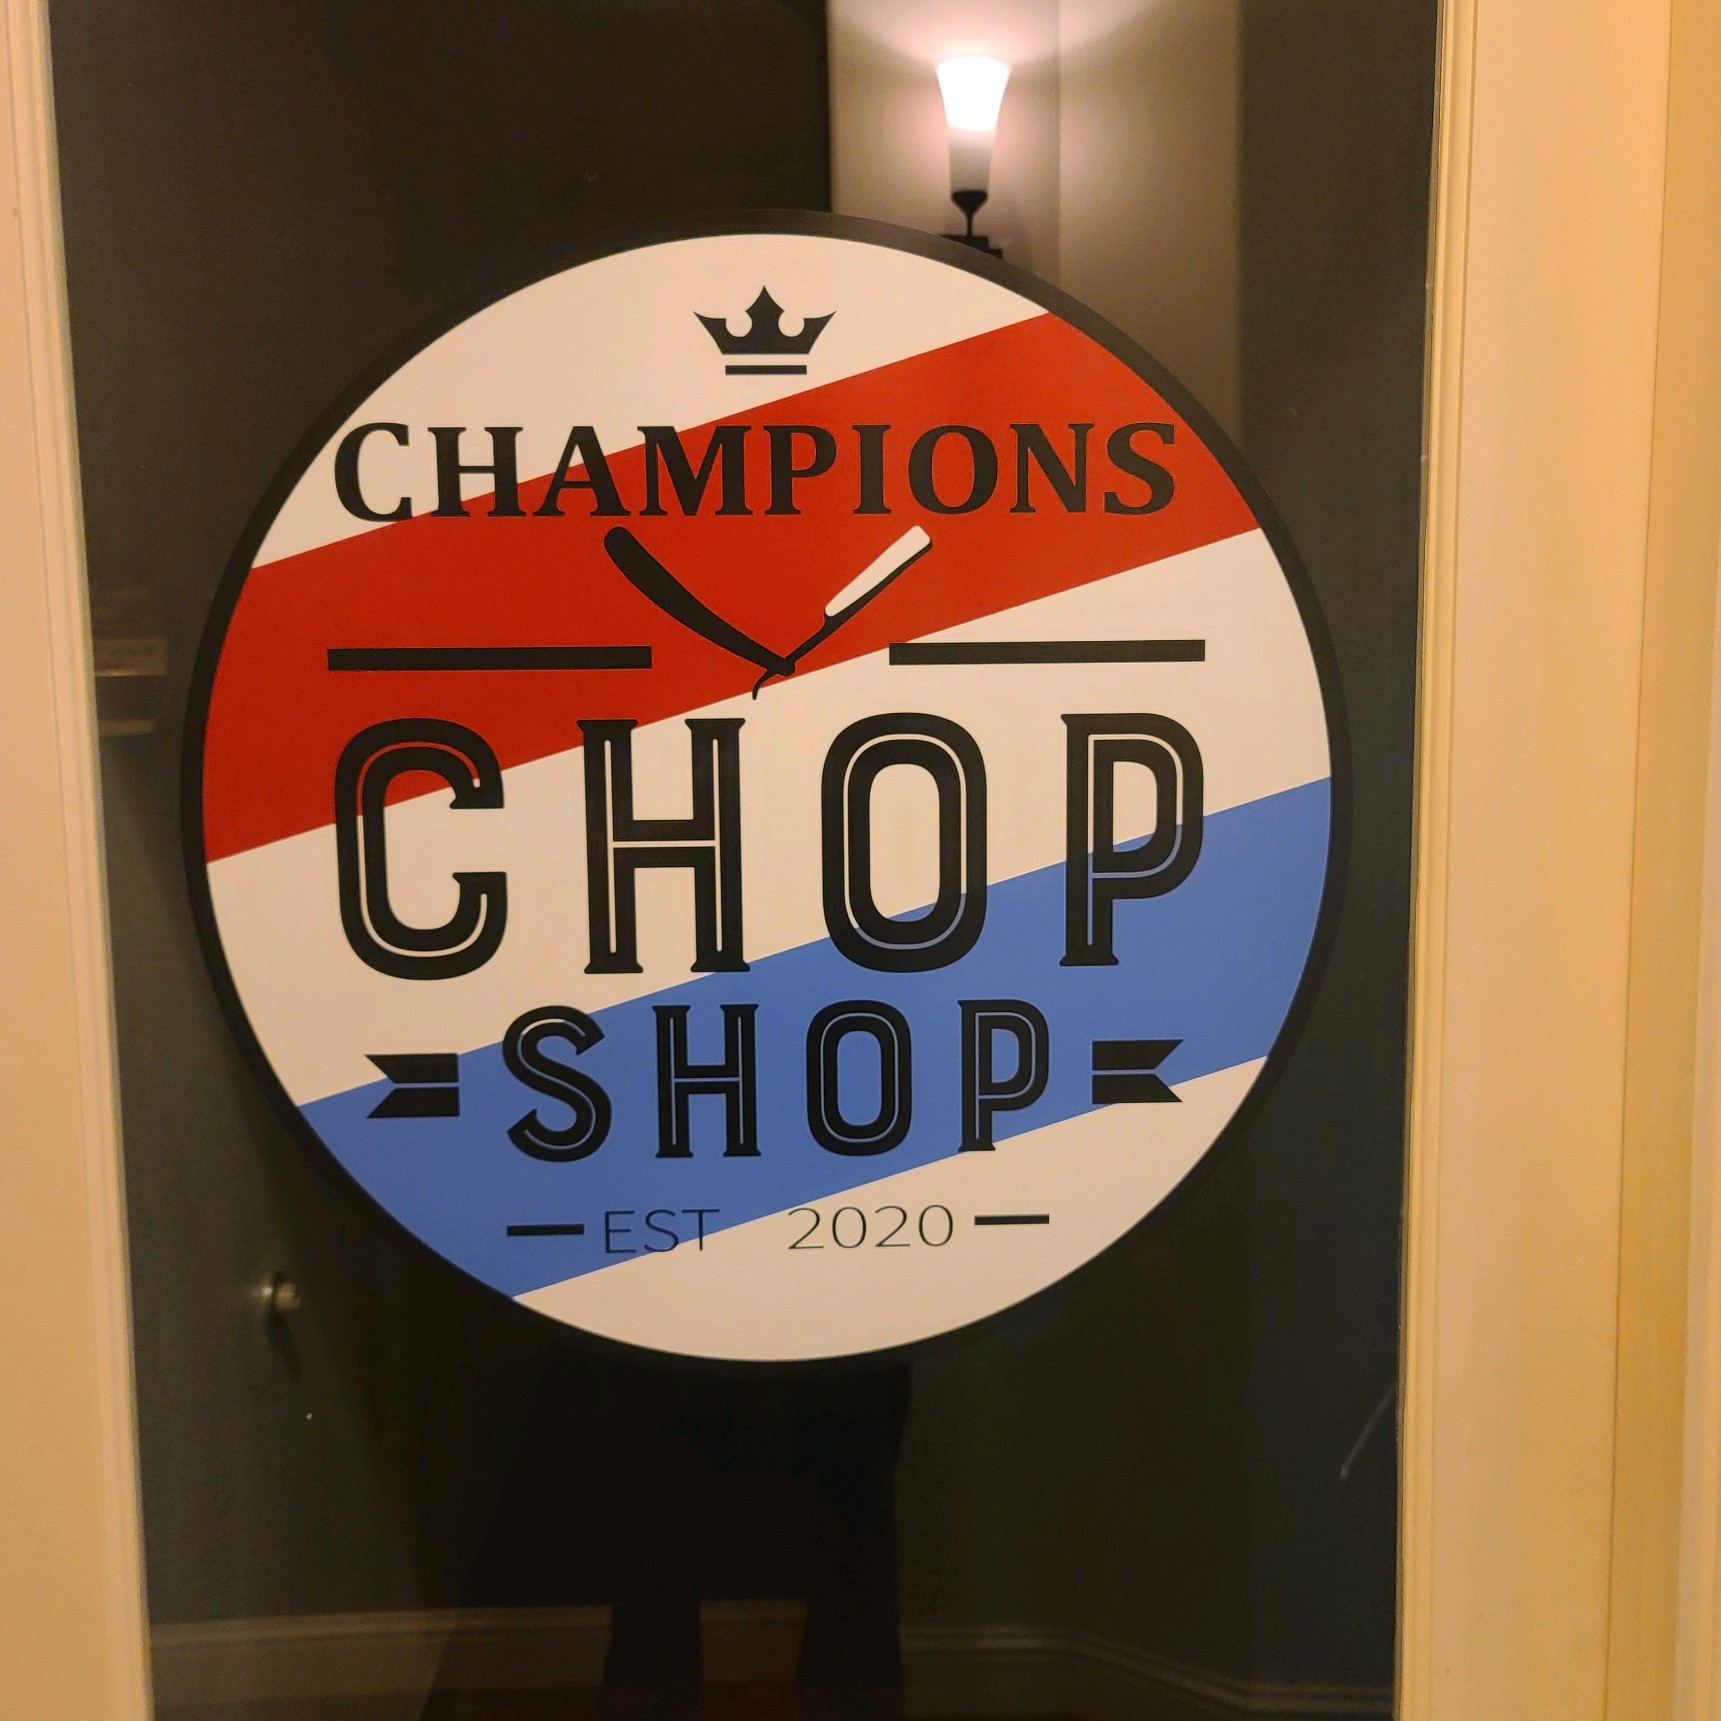 Champions Chop Shop